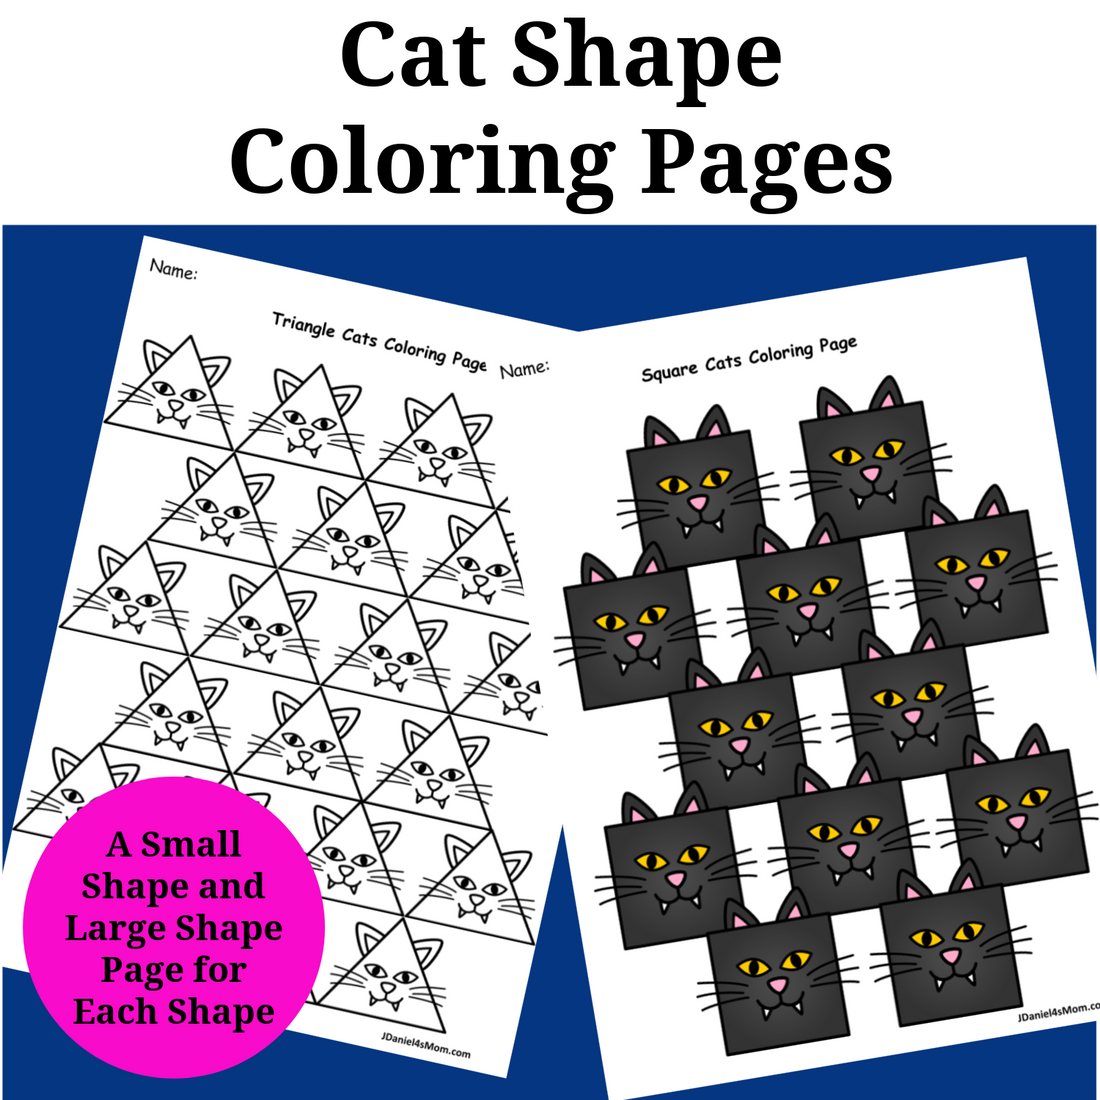 Cat Shape Coloring Pages